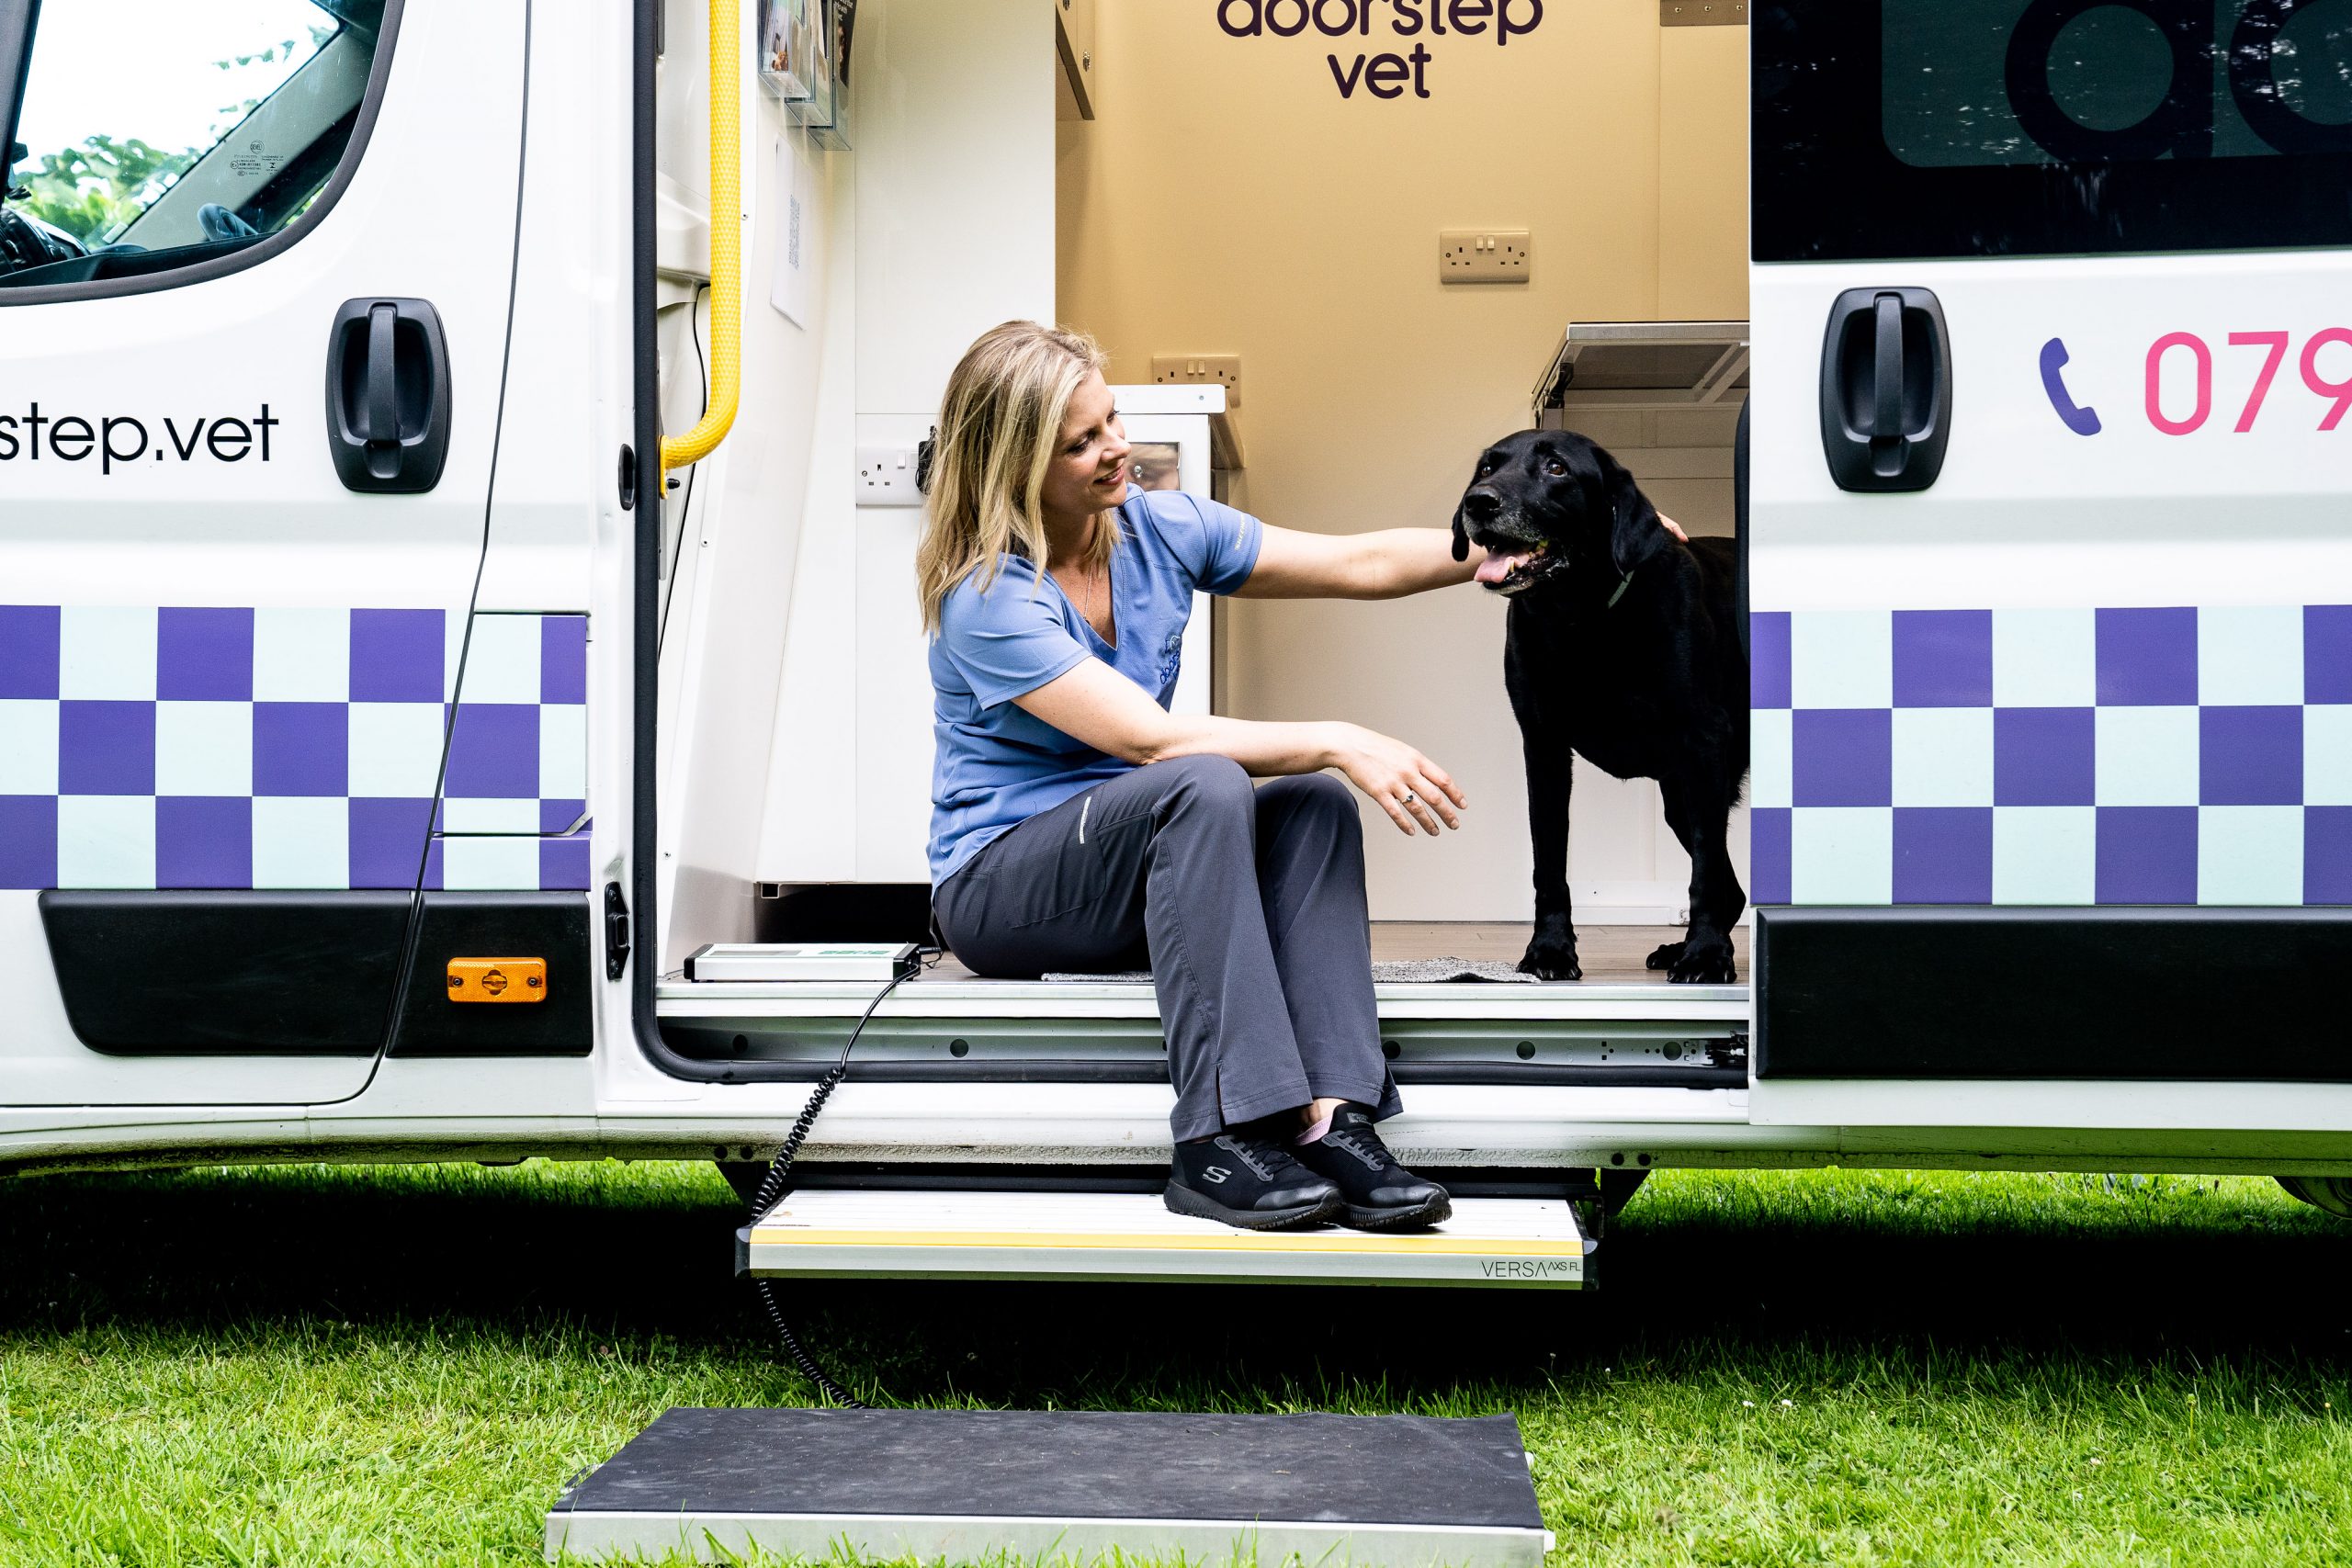 vet and dog in a van